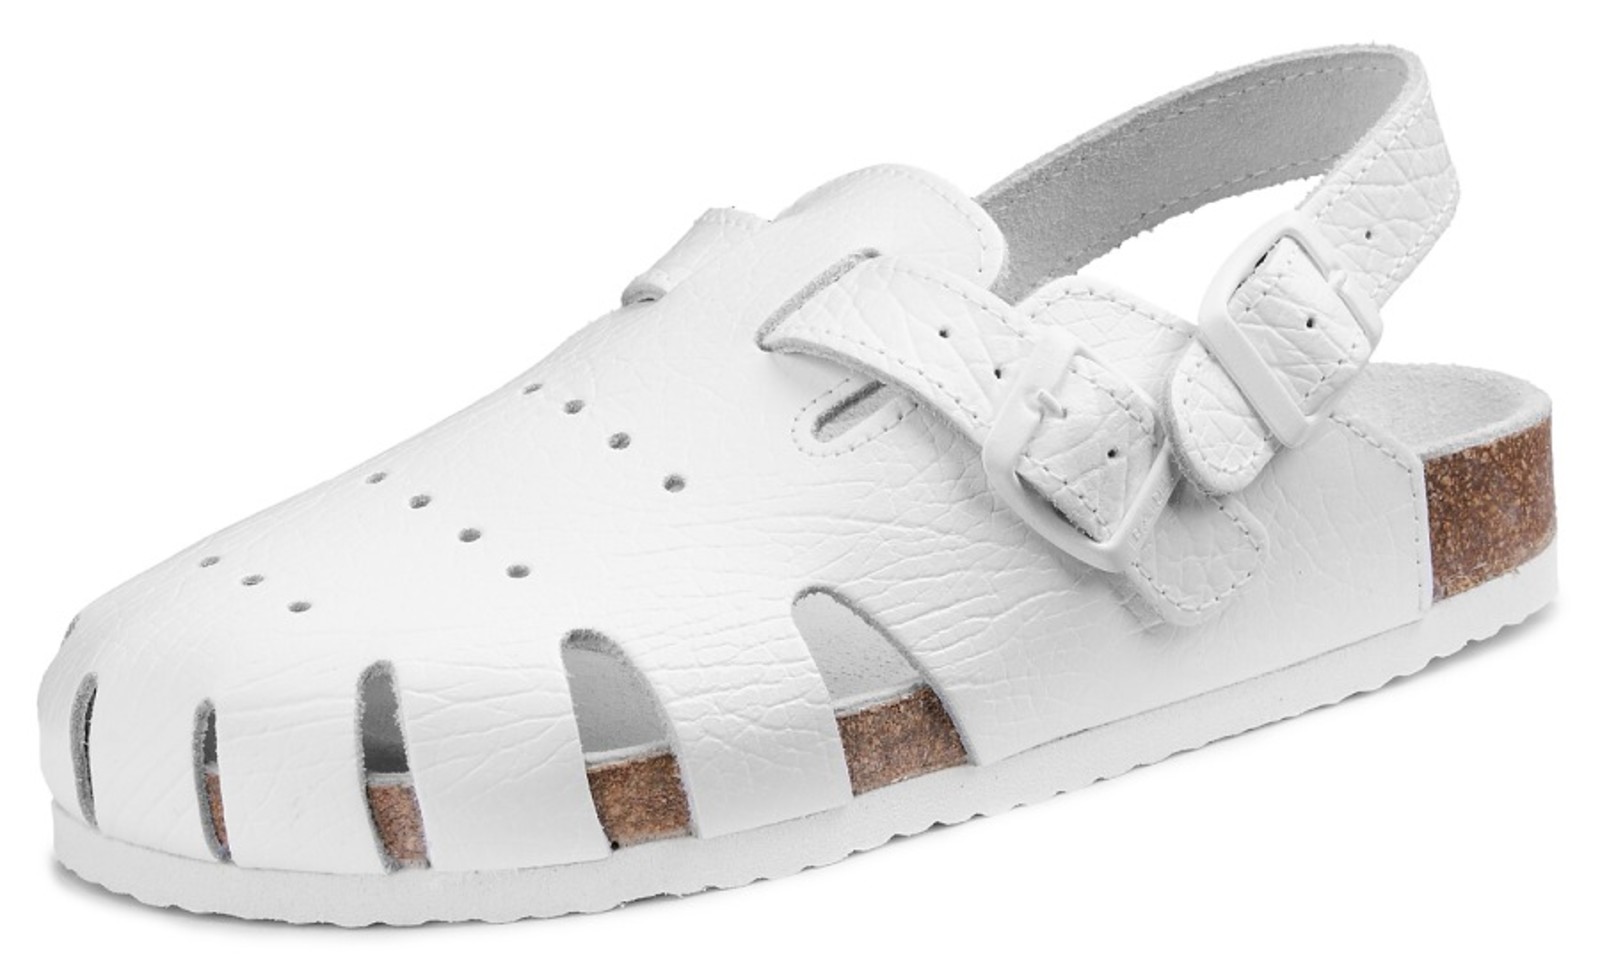 Ortopedické sandále Barea 090520 - veľkosť: 41, farba: biela